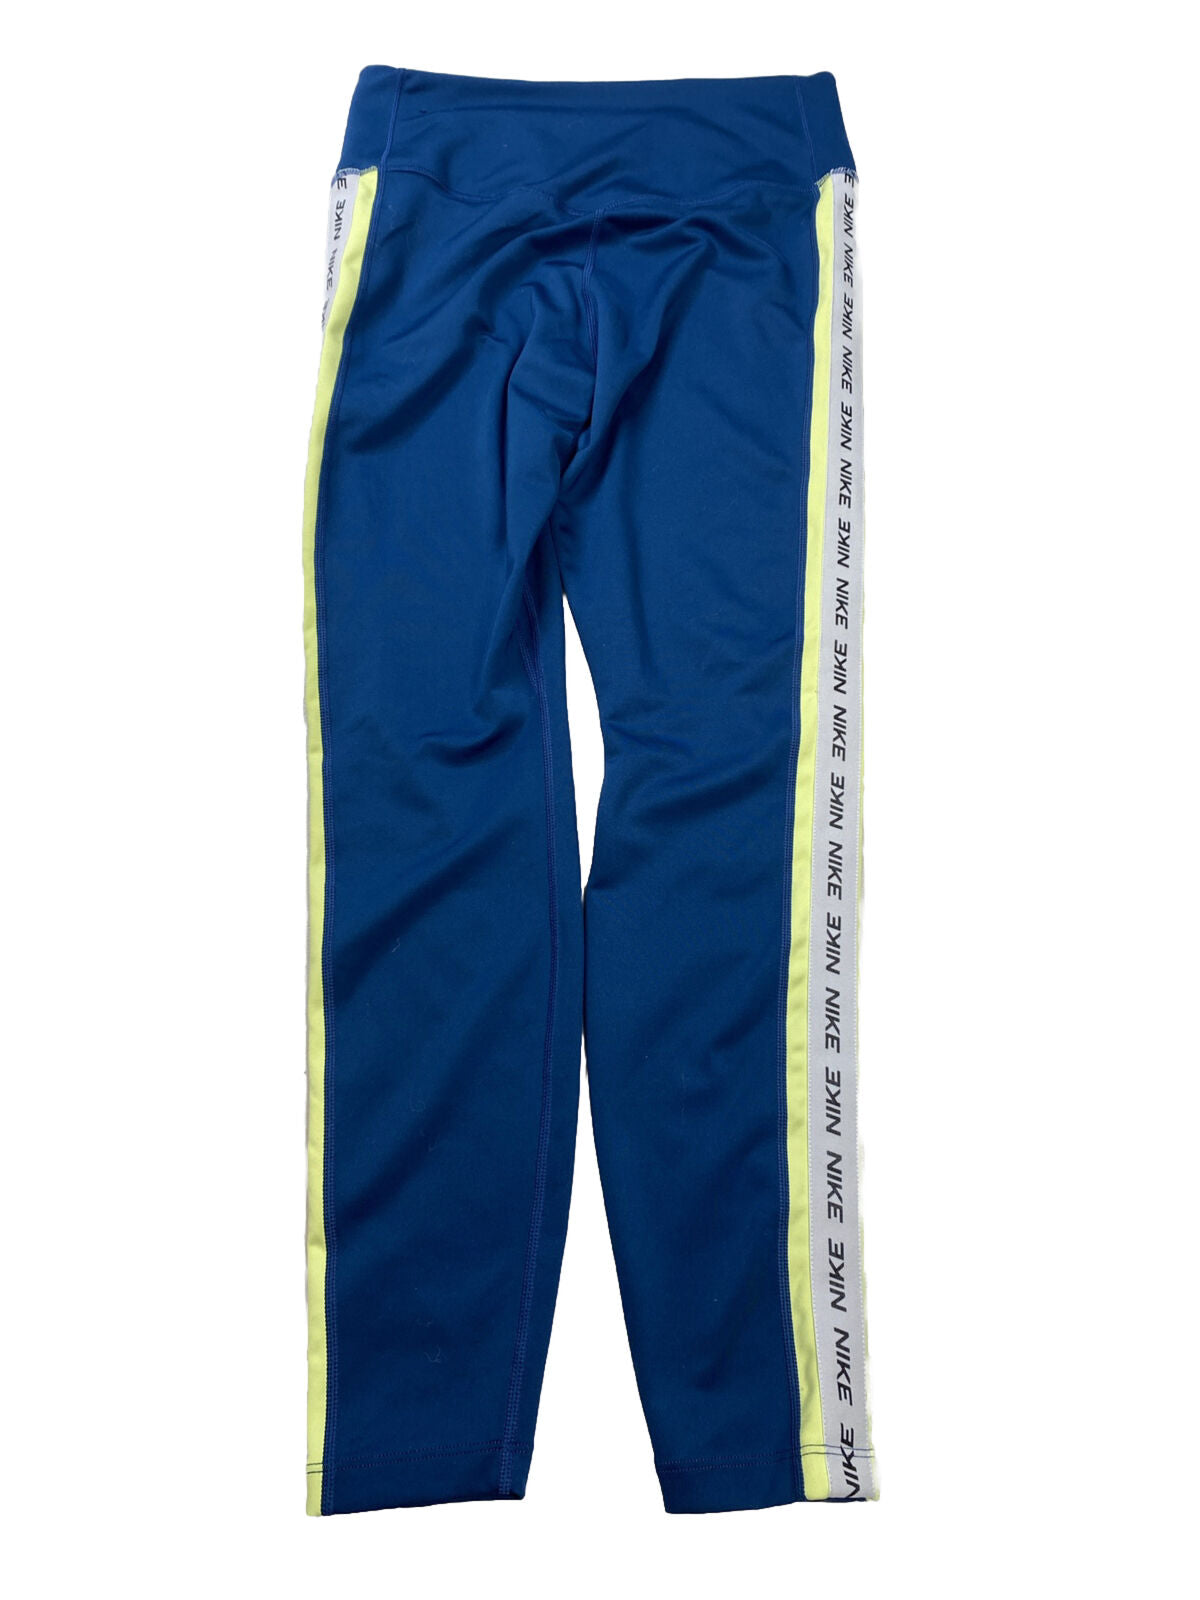 Nike - Leggings deportivos para mujer, color azul, talla M